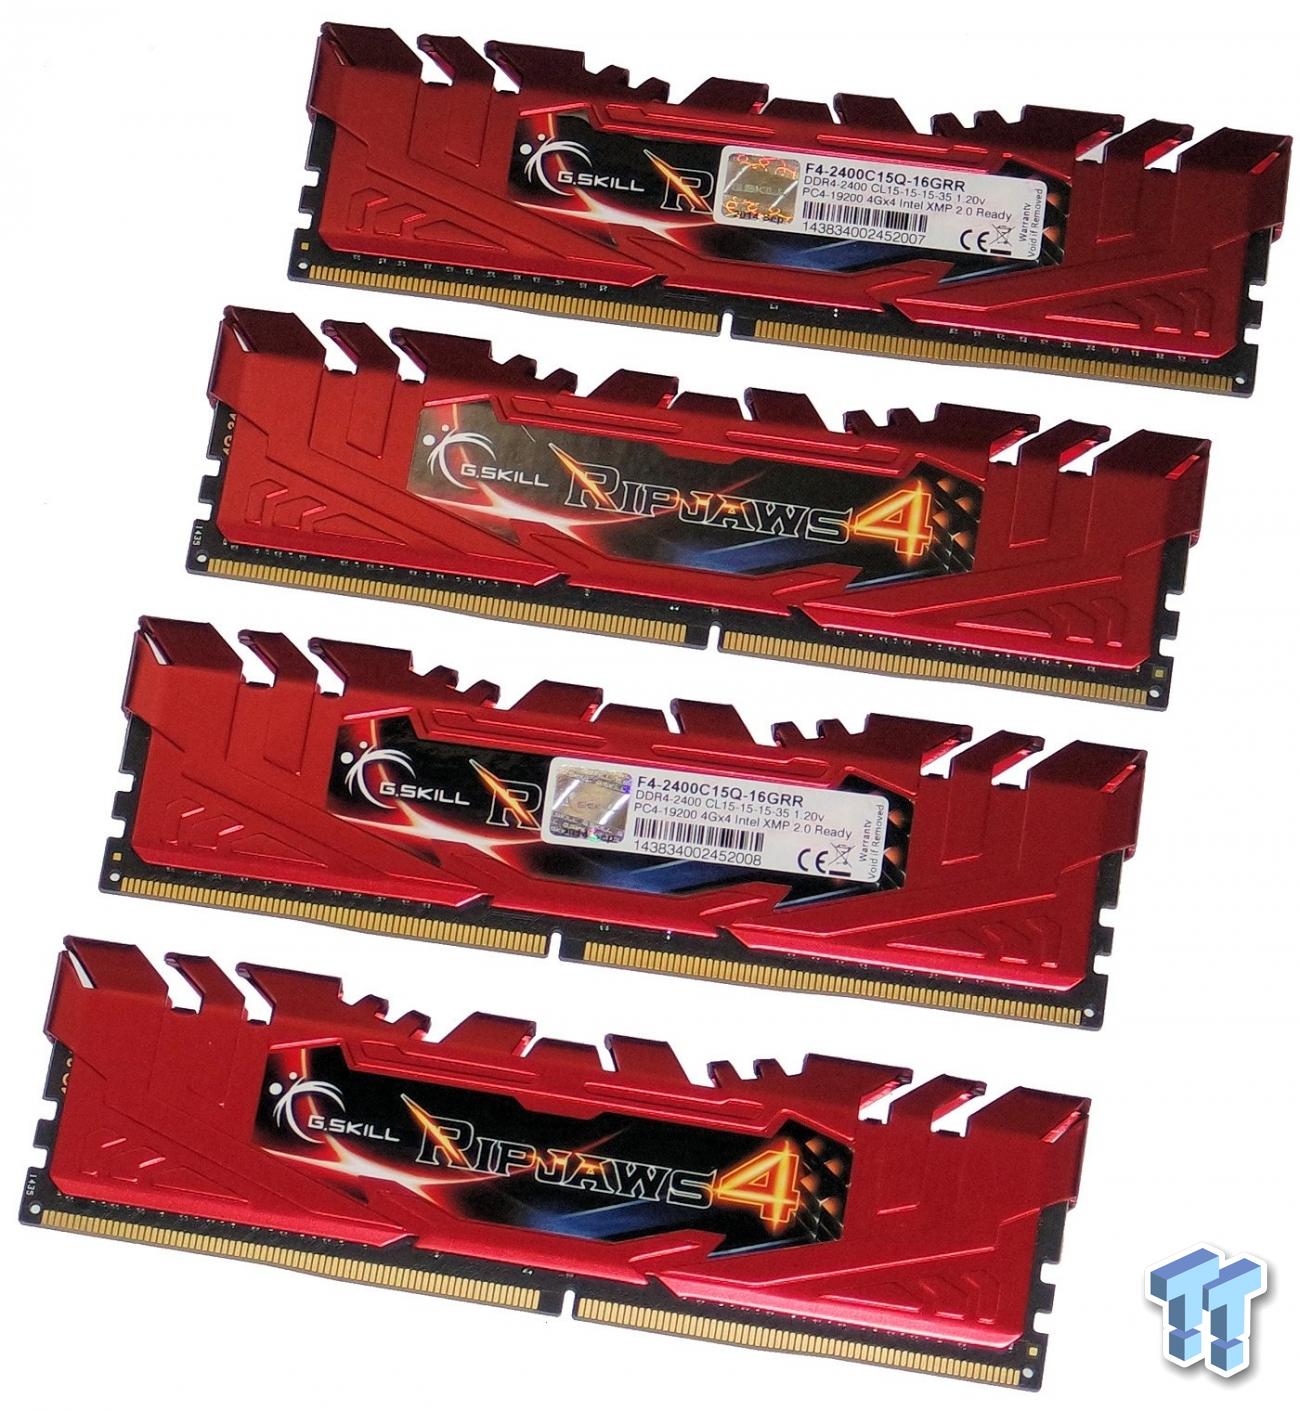 G.Skill Ripjaws4 DDR4-2400 16GB Quad-Channel Memory Kit Review